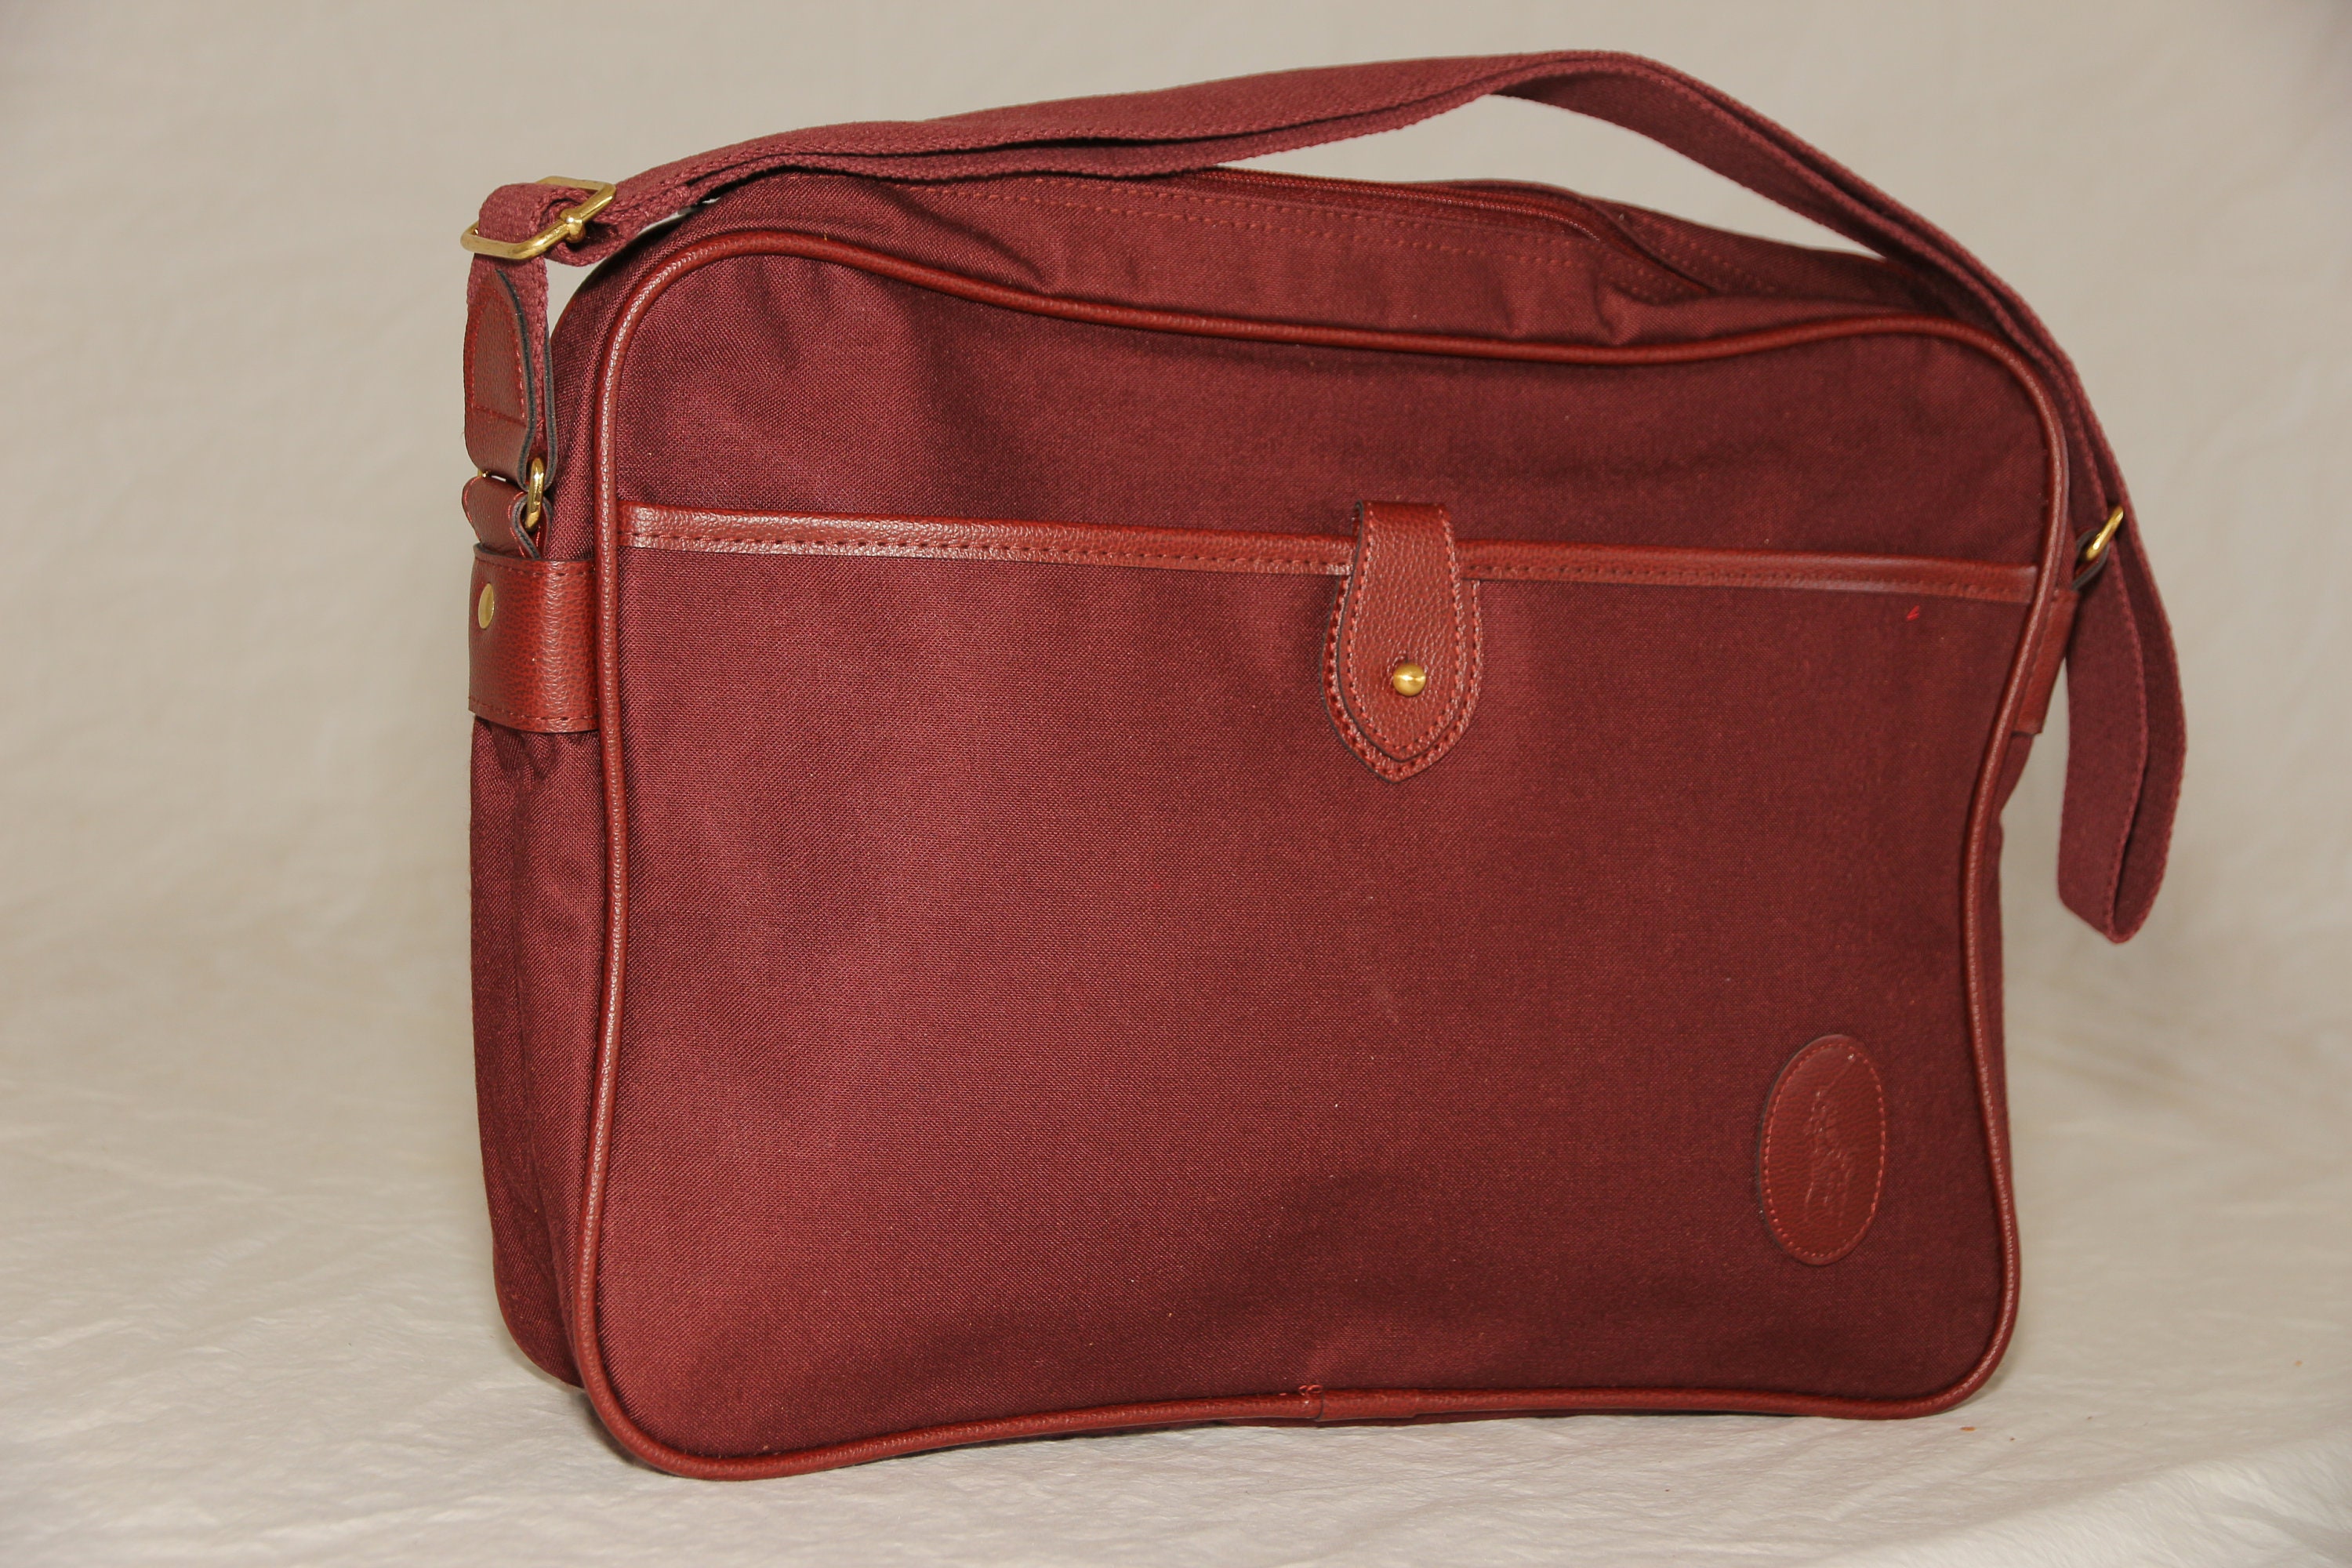 Sale - Women's Ralph Lauren Crossbody Bags / Crossbody Purses ideas: up to  −50%